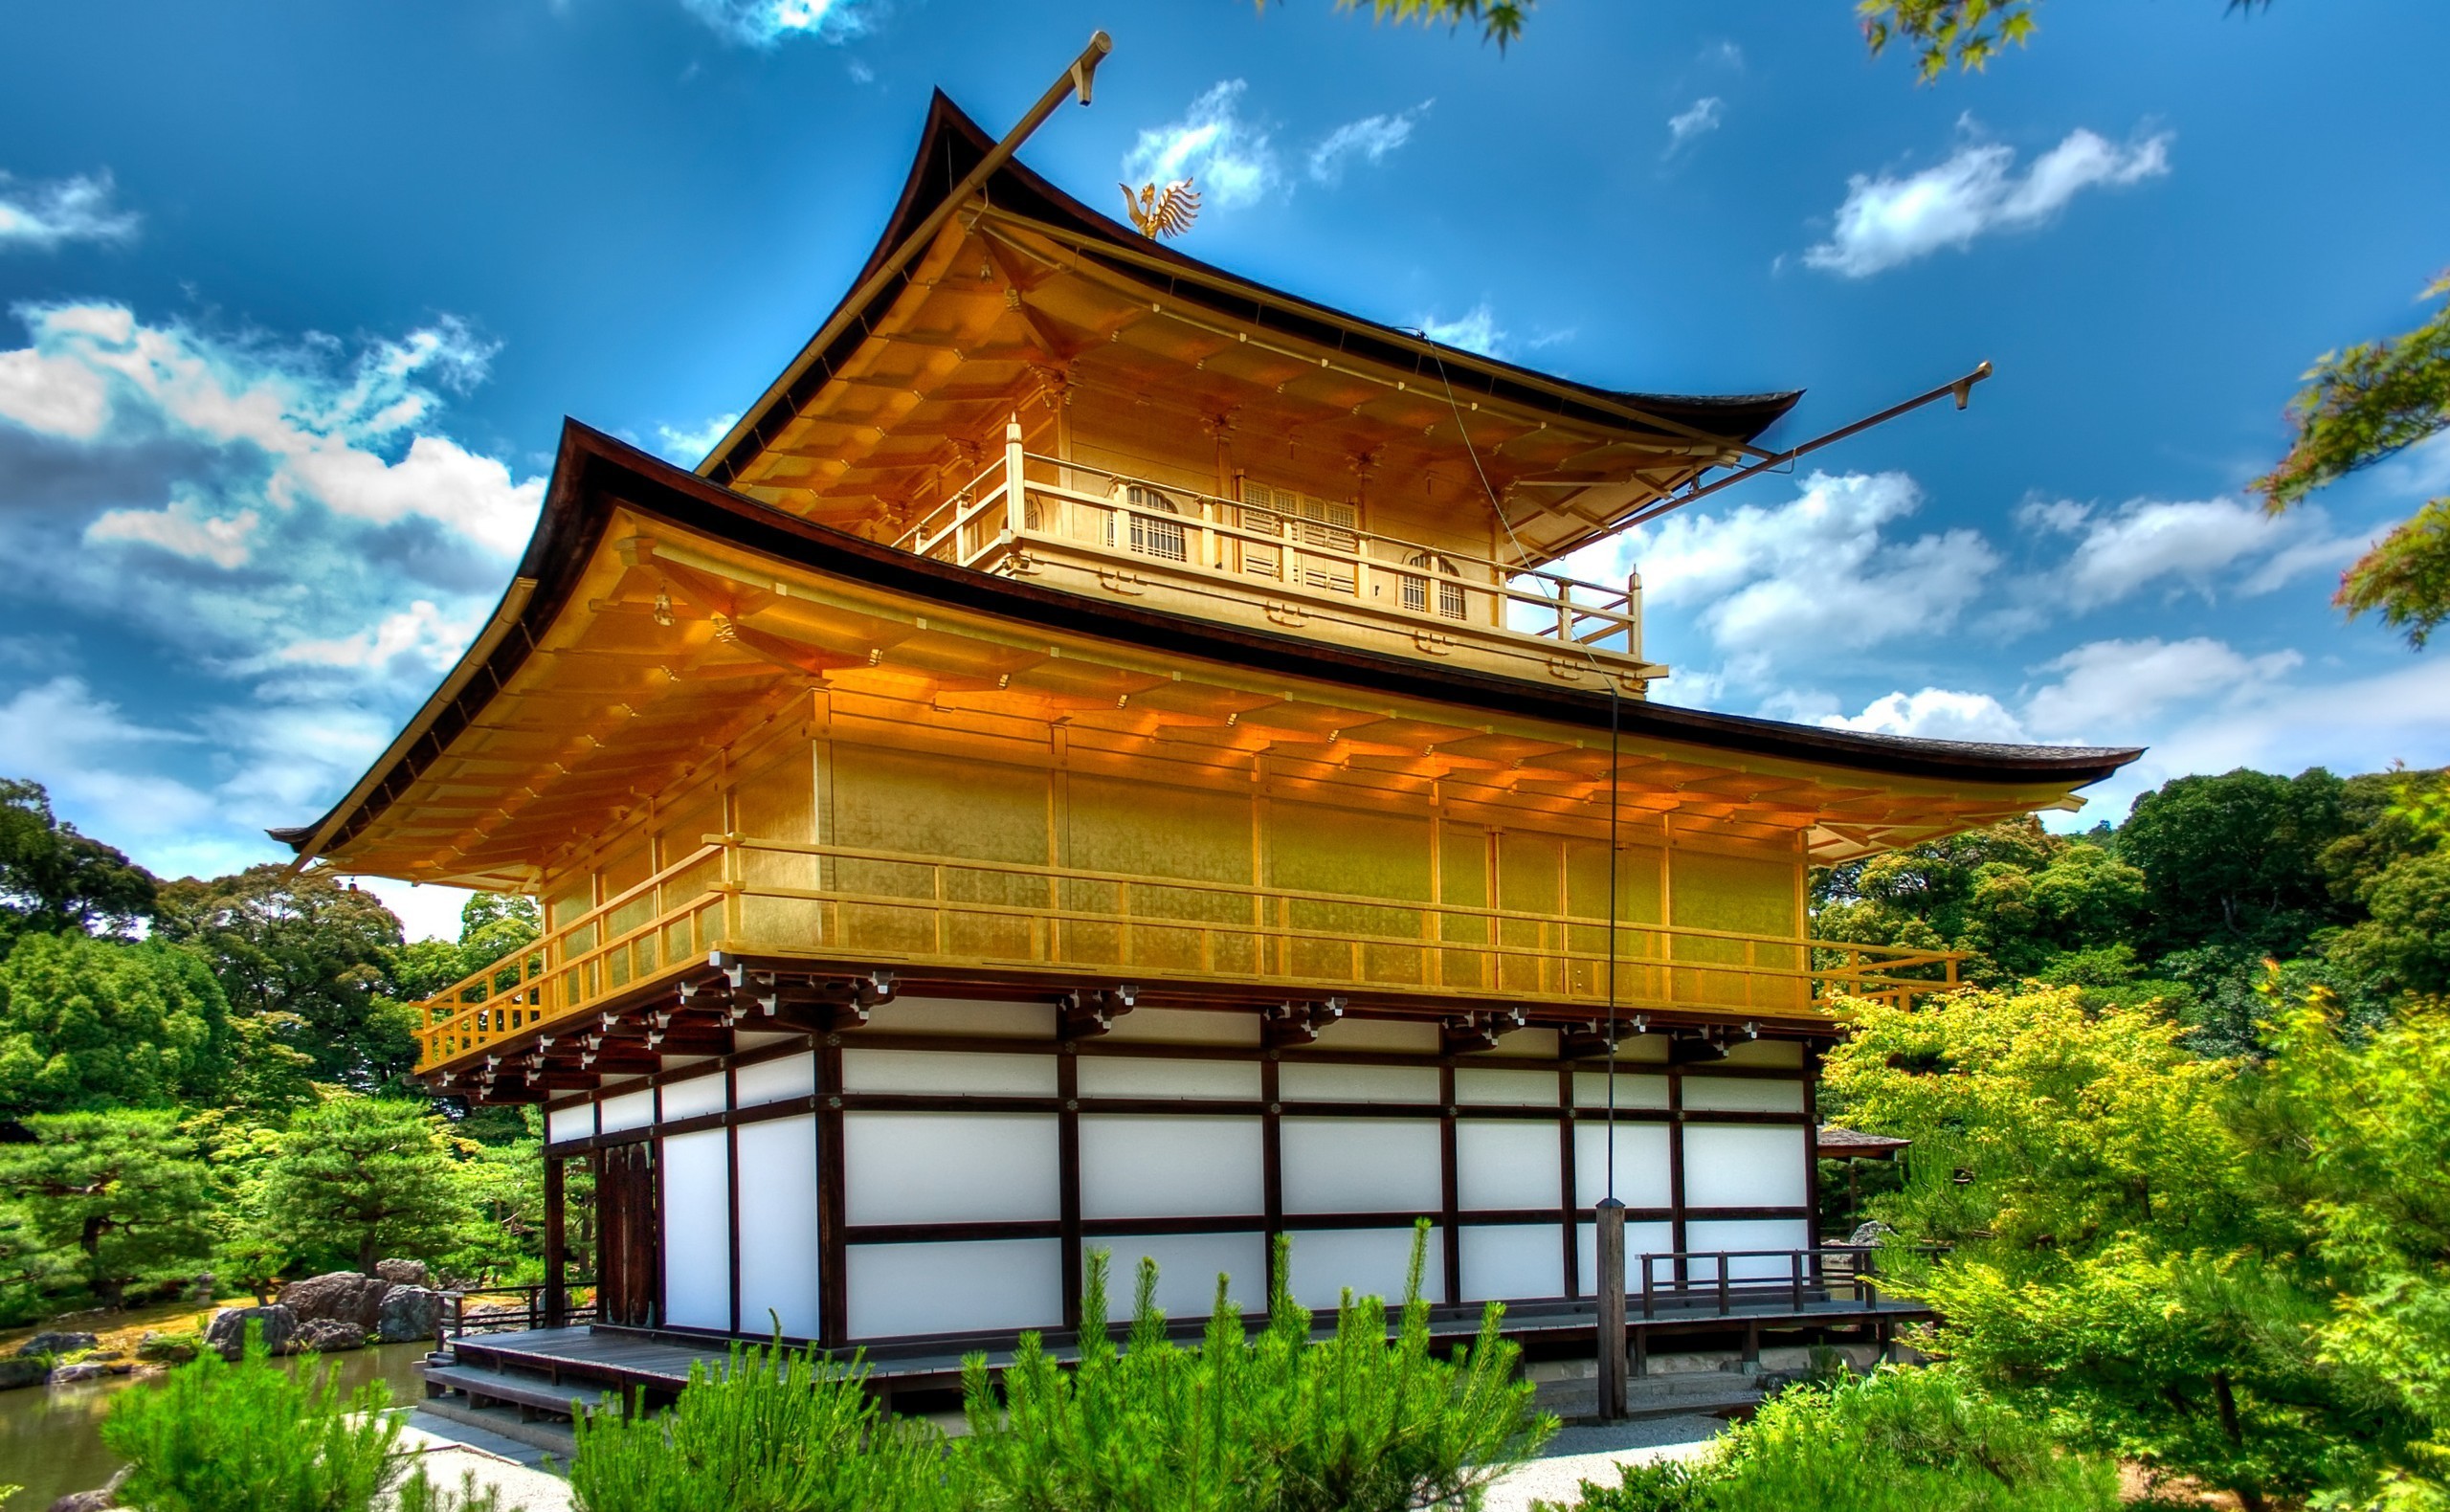 337898 Hintergrundbild herunterladen religiös, kinkaku ji, japan, kyōto, der tempel des goldenen pavillons, tempel - Bildschirmschoner und Bilder kostenlos